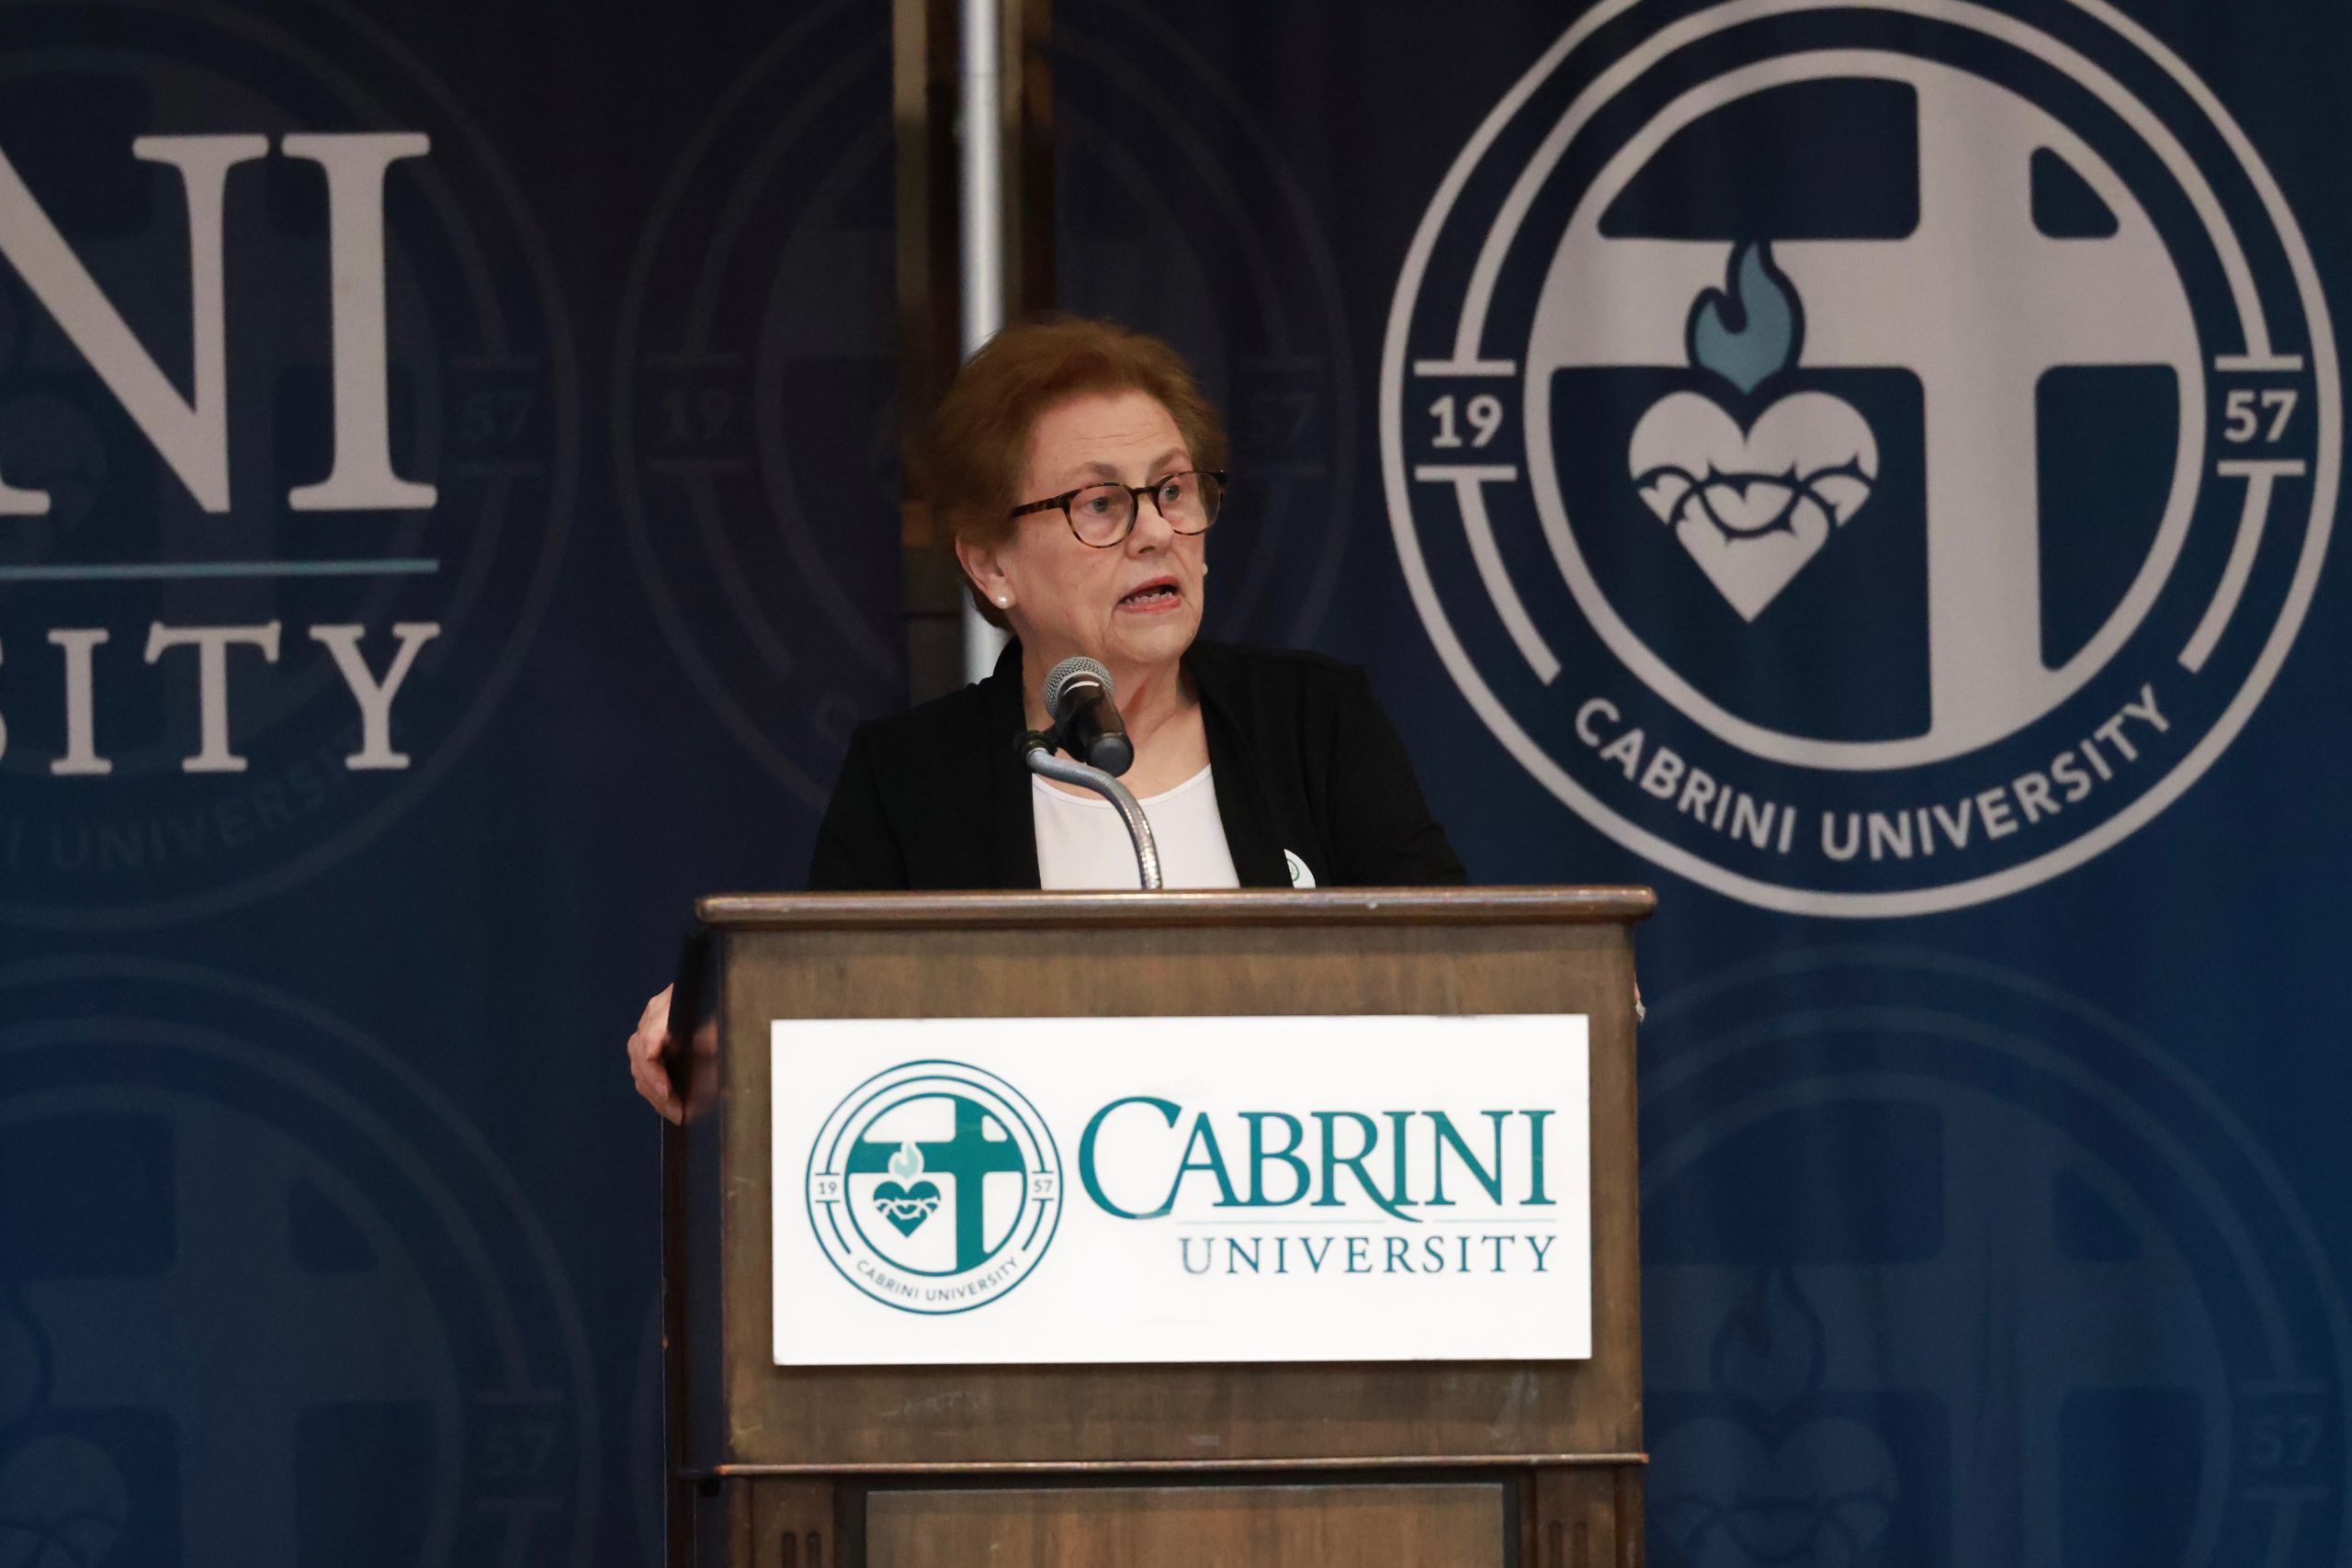 President Helen Drinan speaking at Cabrini Day